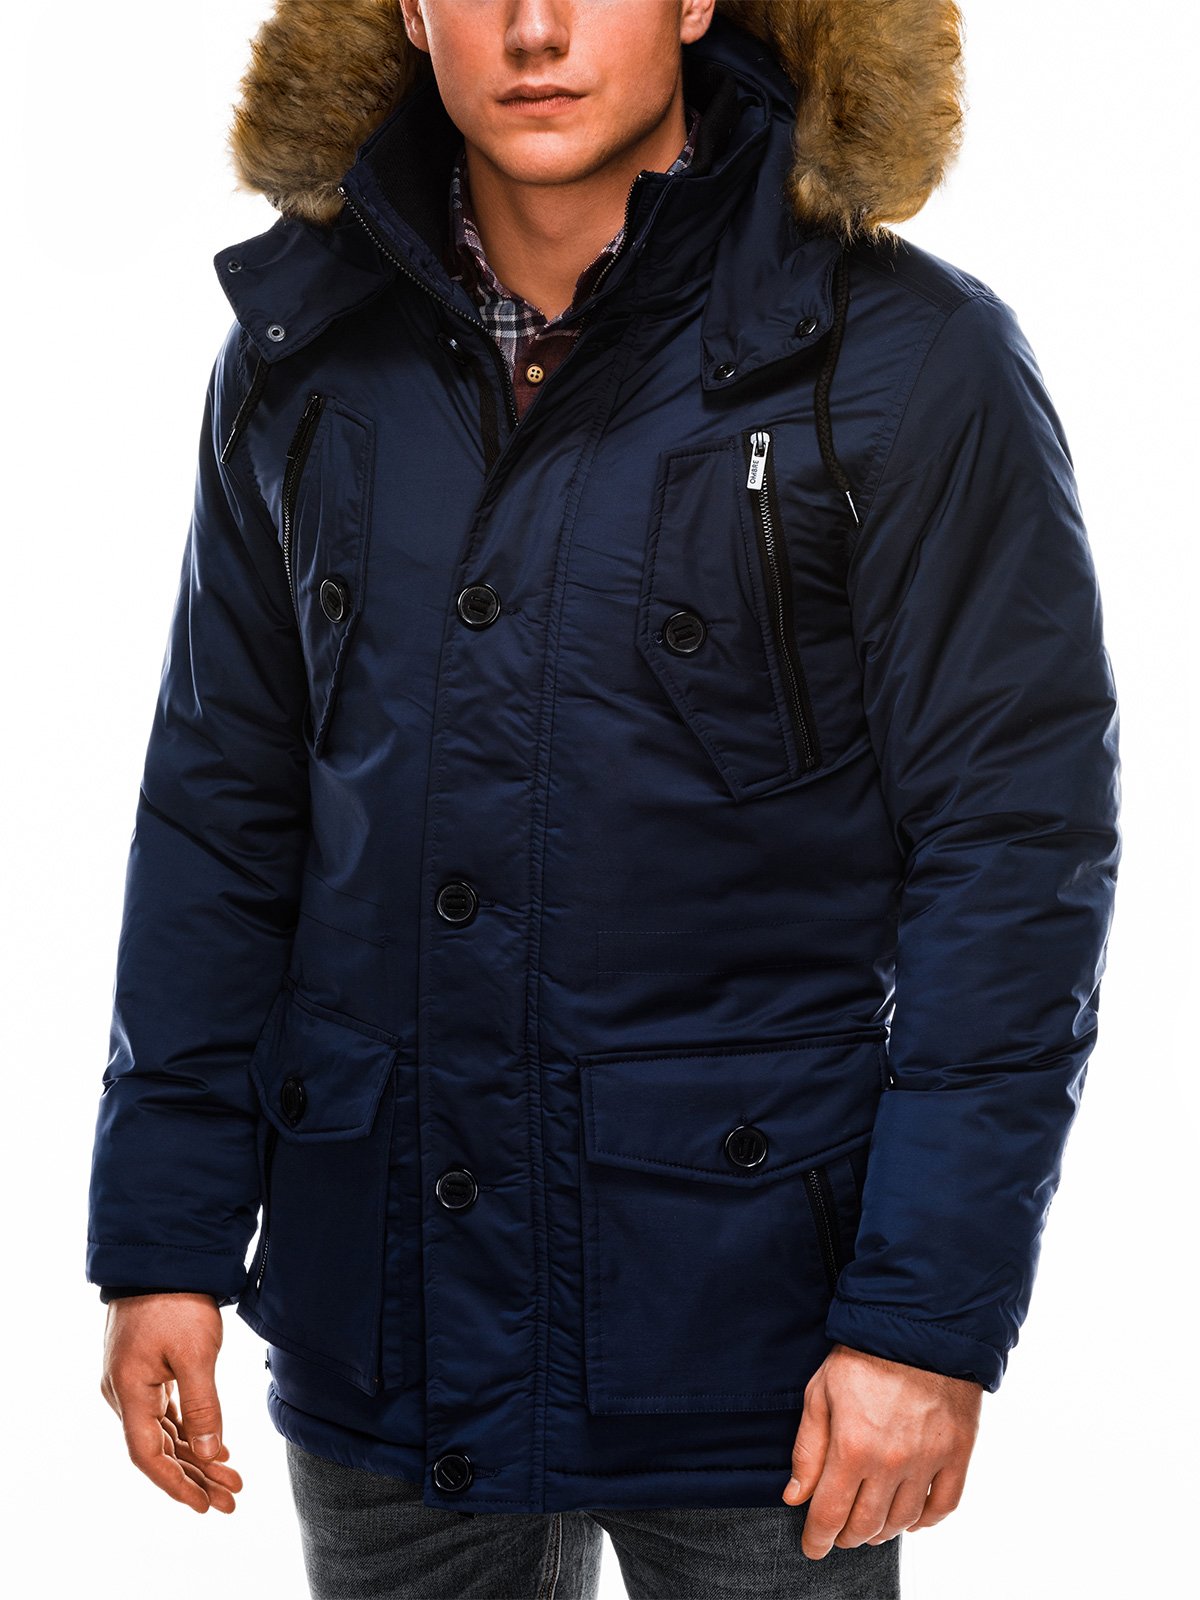  Men  s winter parka  jacket  C361 navy MODONE wholesale 